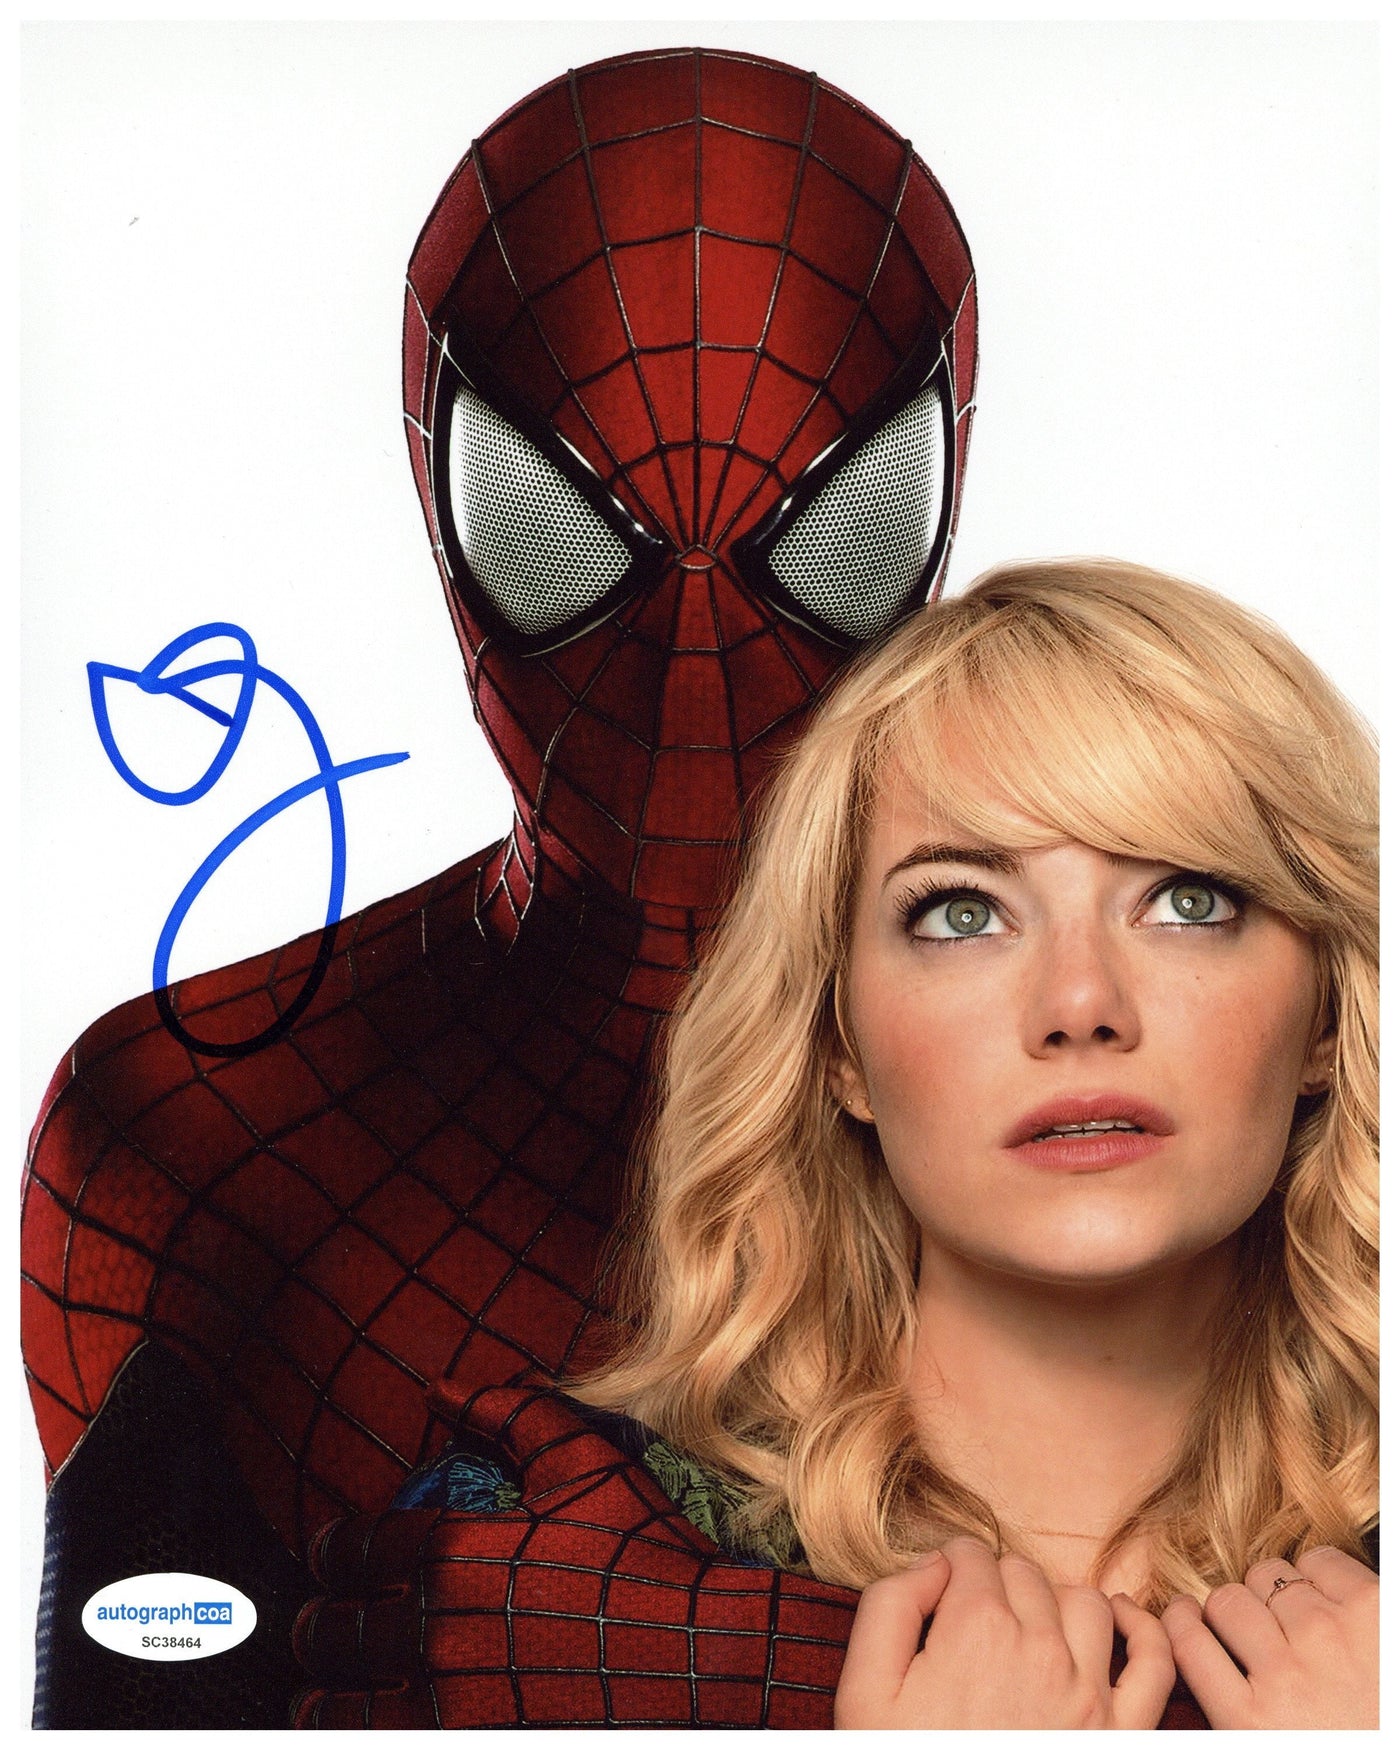 Emma Stone Signed 8x10 Photo Spider-Man Autographed ACOA COA #1